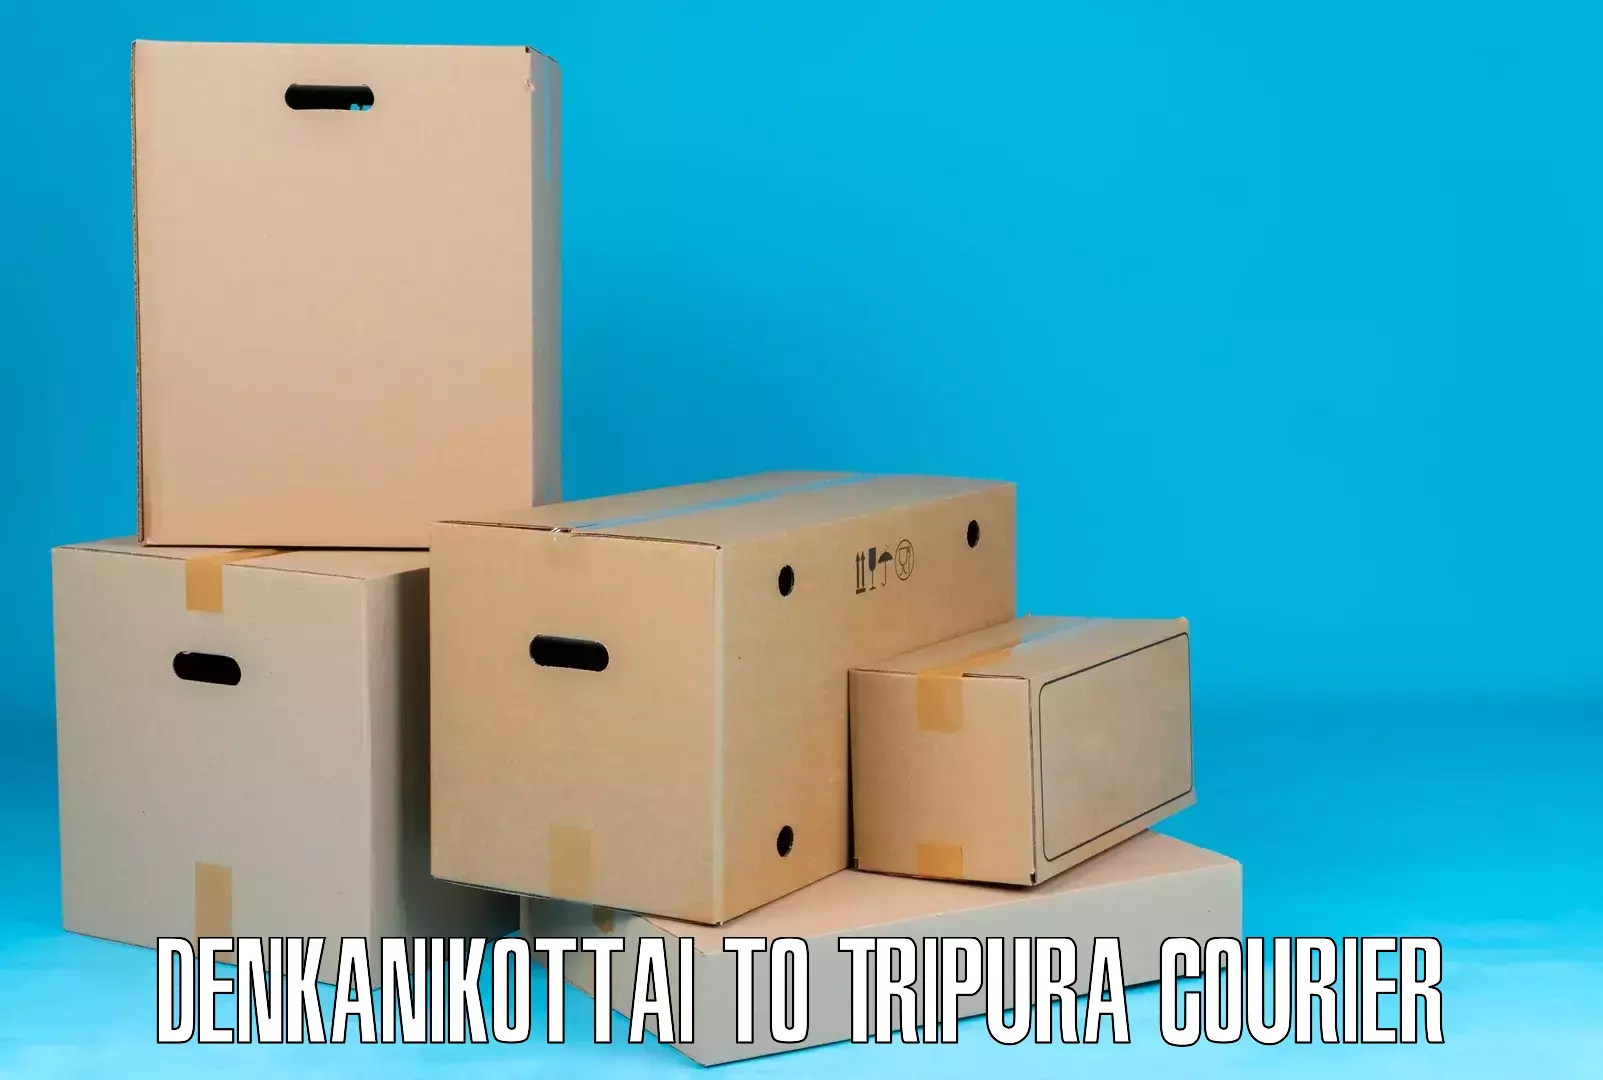 Enhanced shipping experience Denkanikottai to IIIT Agartala